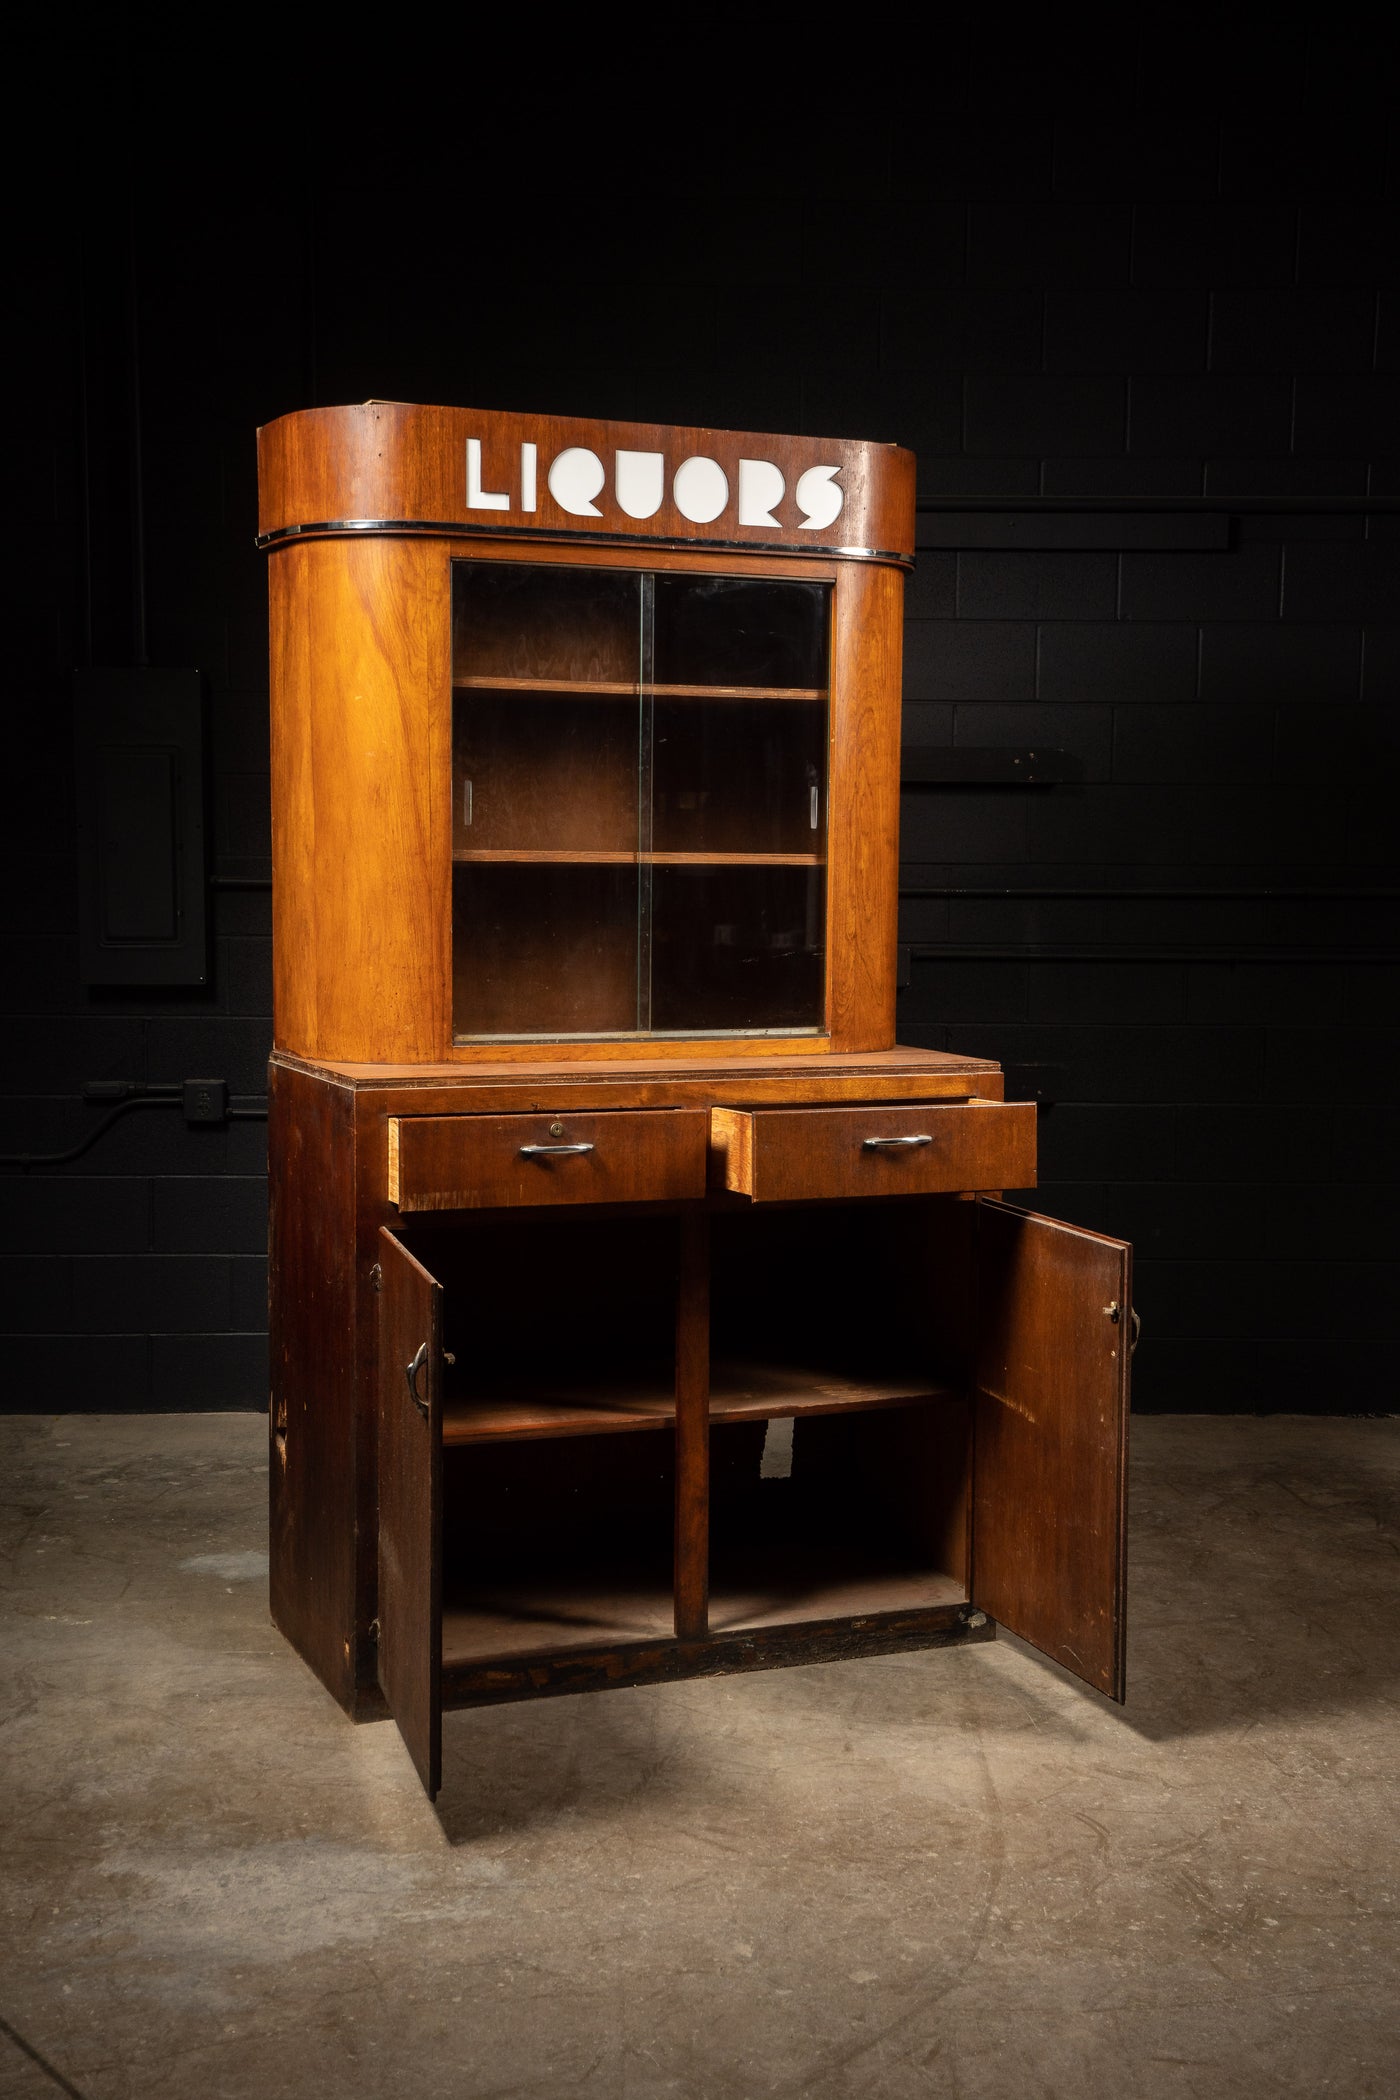 c. 1920s Lighted Liquor Cabinet